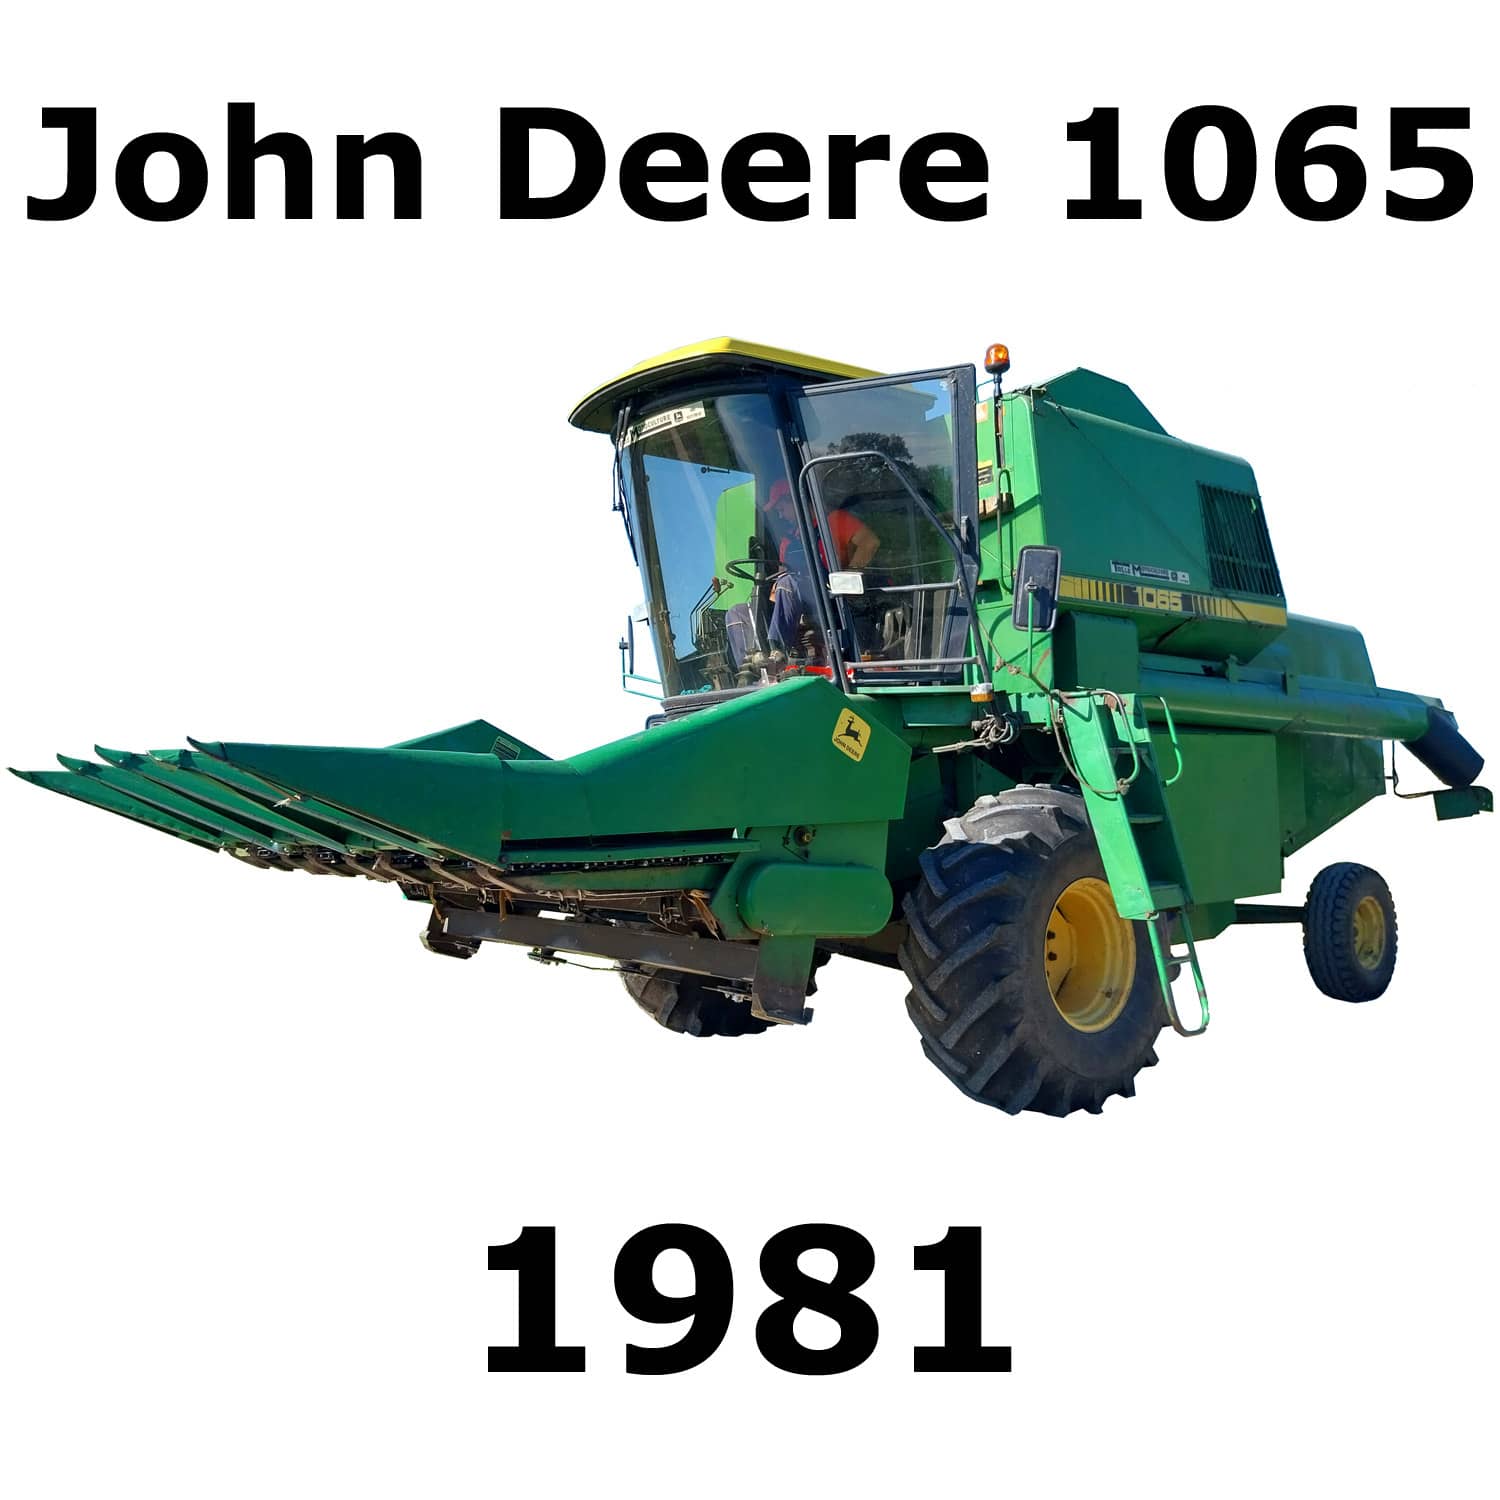 John Deere 1065 1981